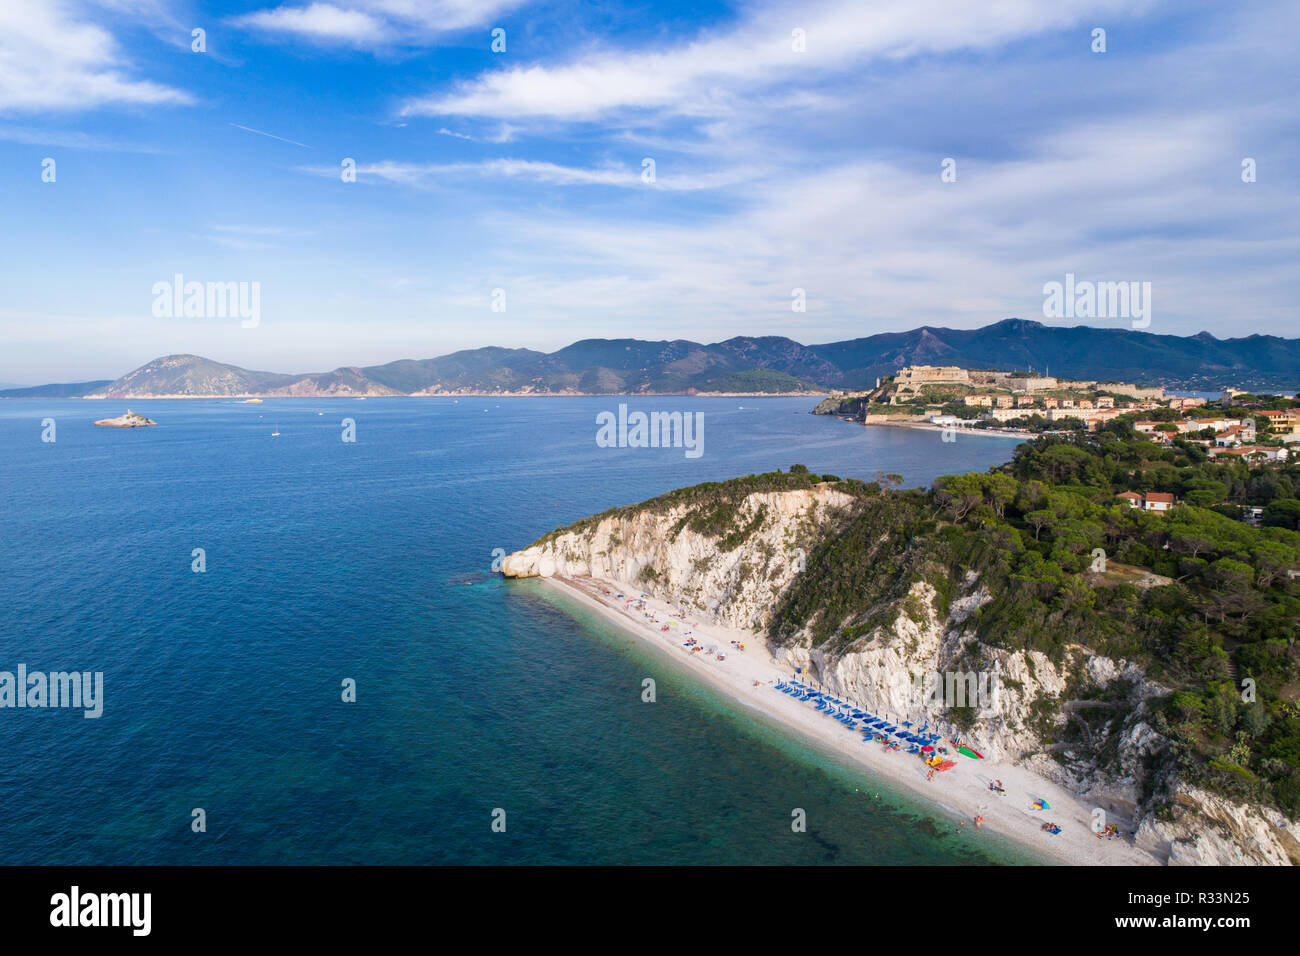 Famous beach of Capobianco near Portoferraio. Island of Elba in Italy. Aerial shot Stock Photo